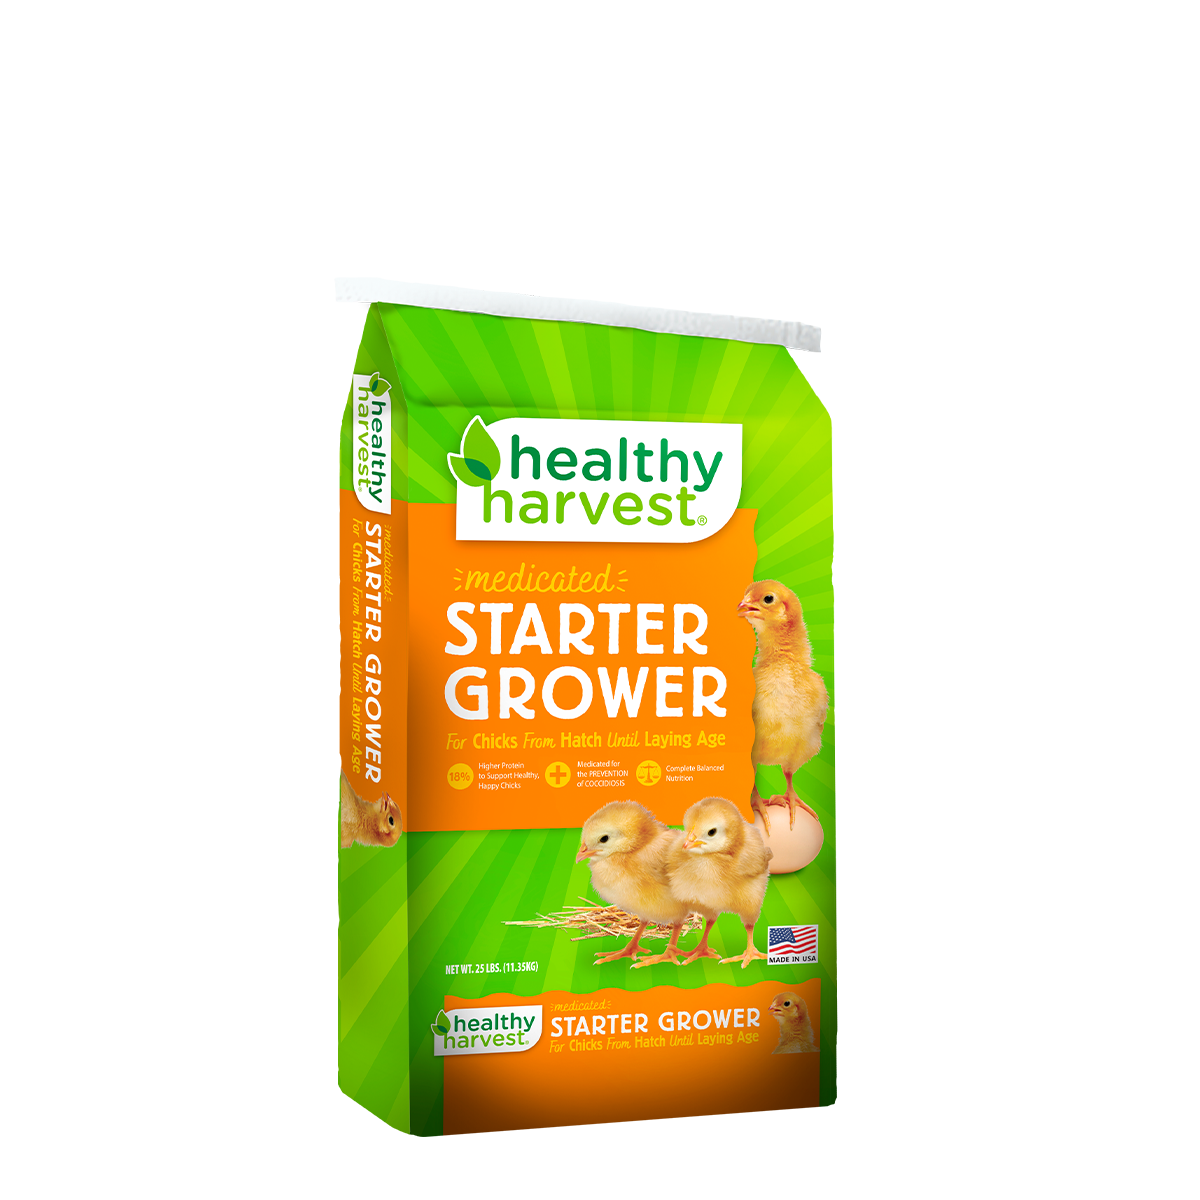 Medicated Starter/Grower